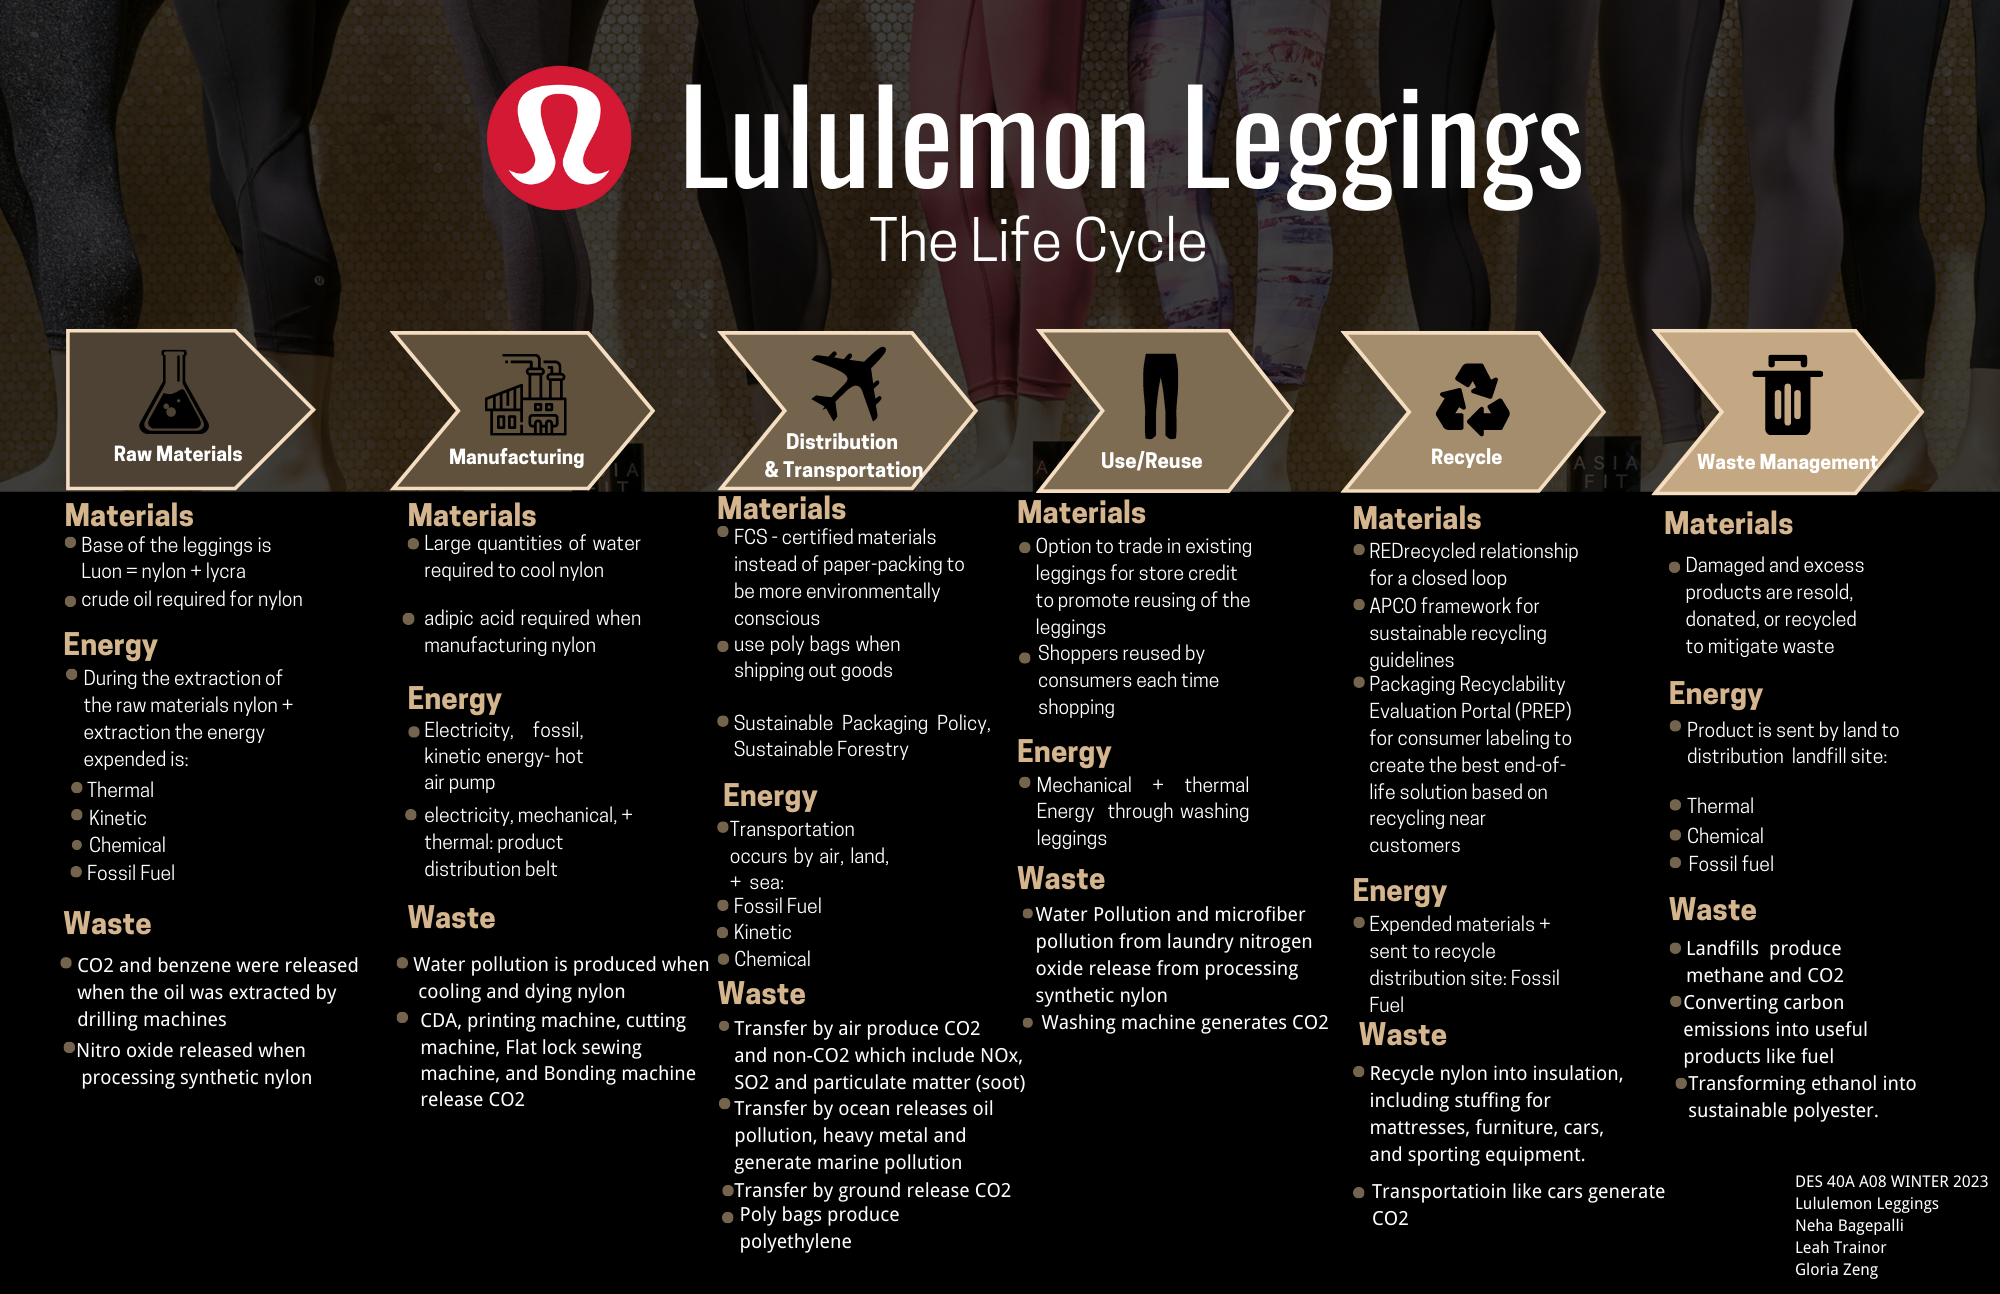 Lulu lemon leggings